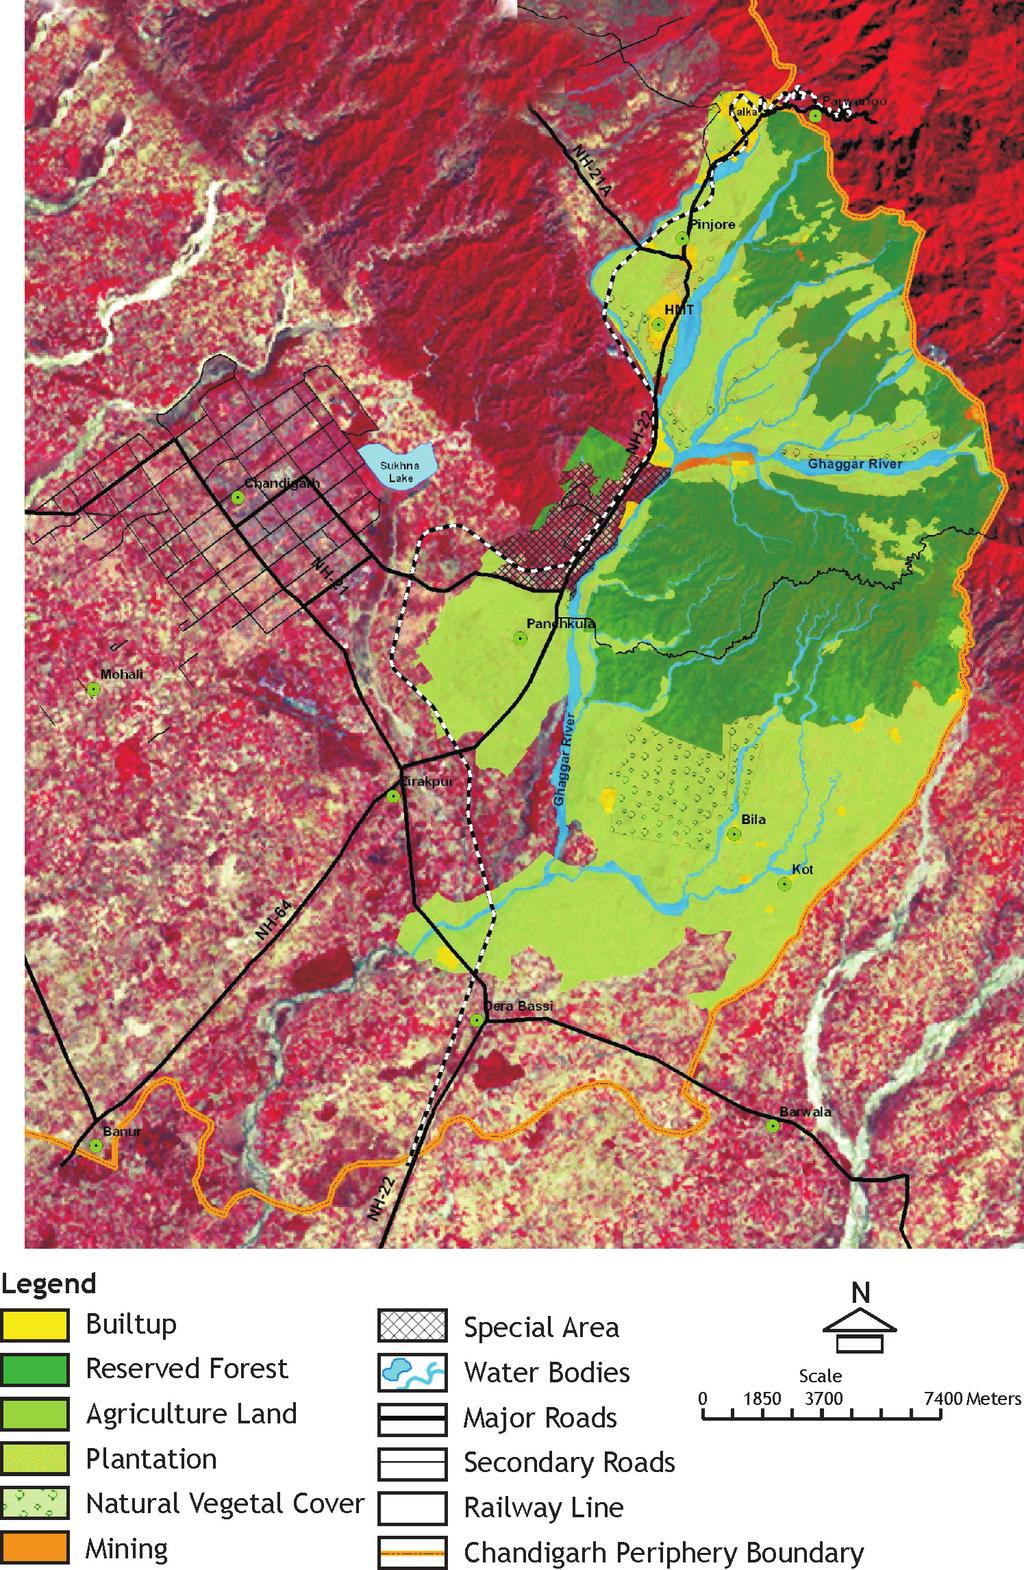 Fig. 3: Haryana Sub-Region, Chandigarh Periphery Landuse / Landcover